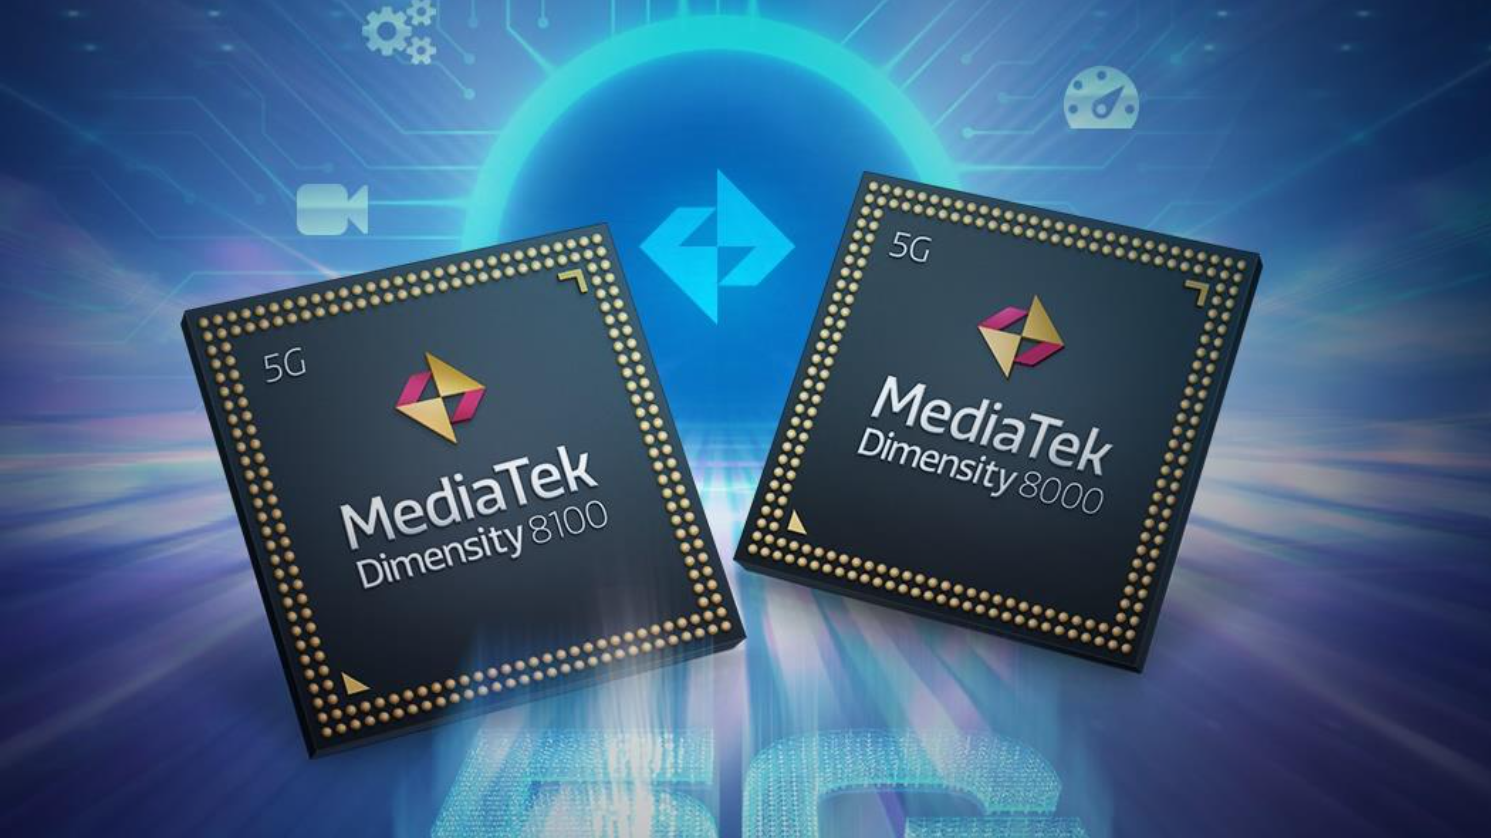 MediaTek's newest Dimensity chips take aim at Qualcomm's older models